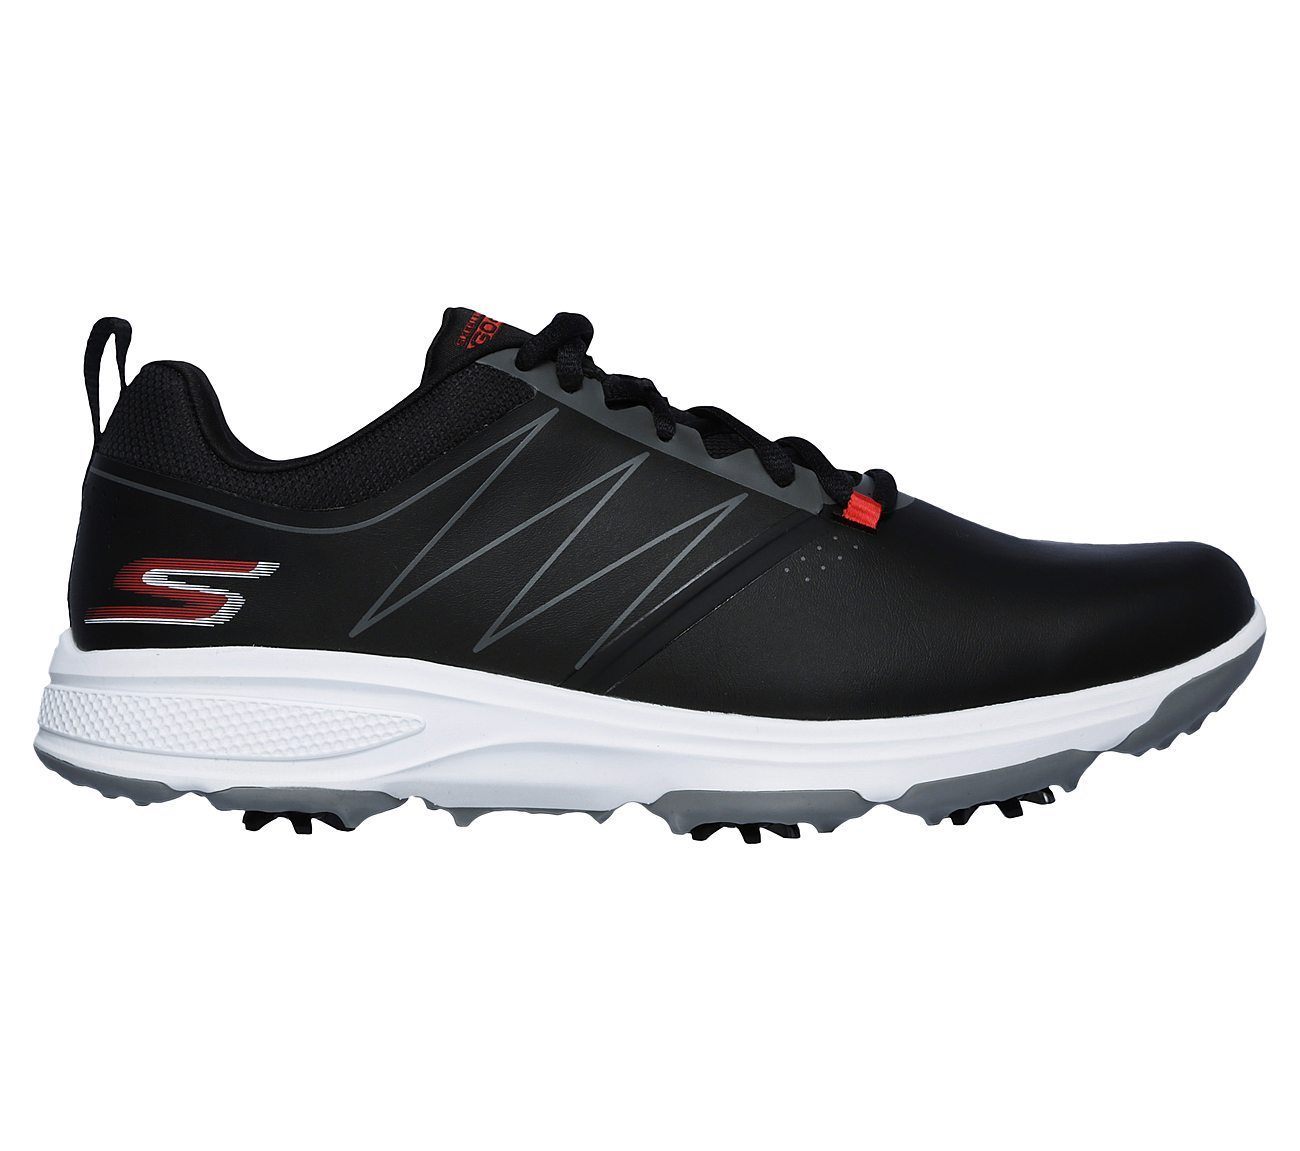 Skechers Go Golf Torque 54541 Men's Golf Shoe Black/Red – Golf Stuff